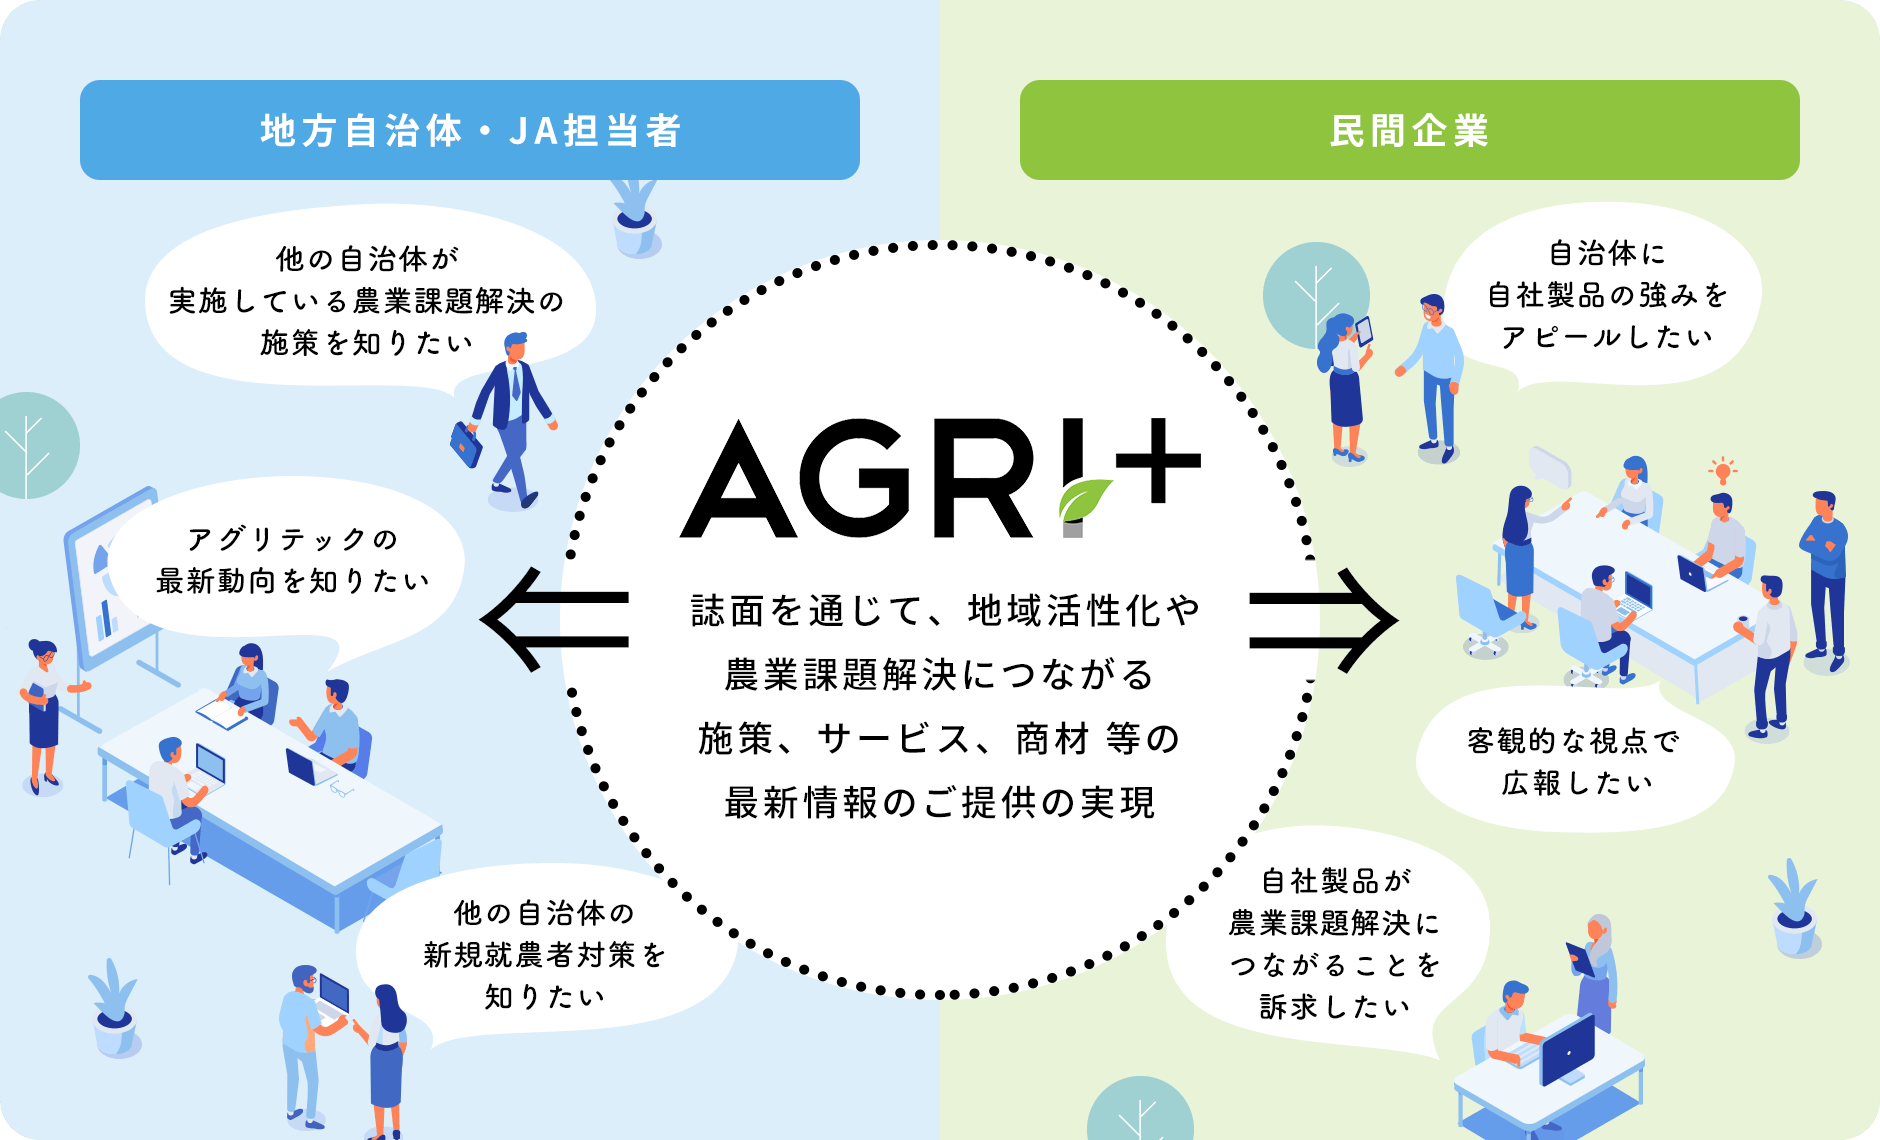 AGRI+ 誌面を通じて、地域活性化や農業課題解決につながる施策、サービス、商材 等の最新情報のご提供の実現